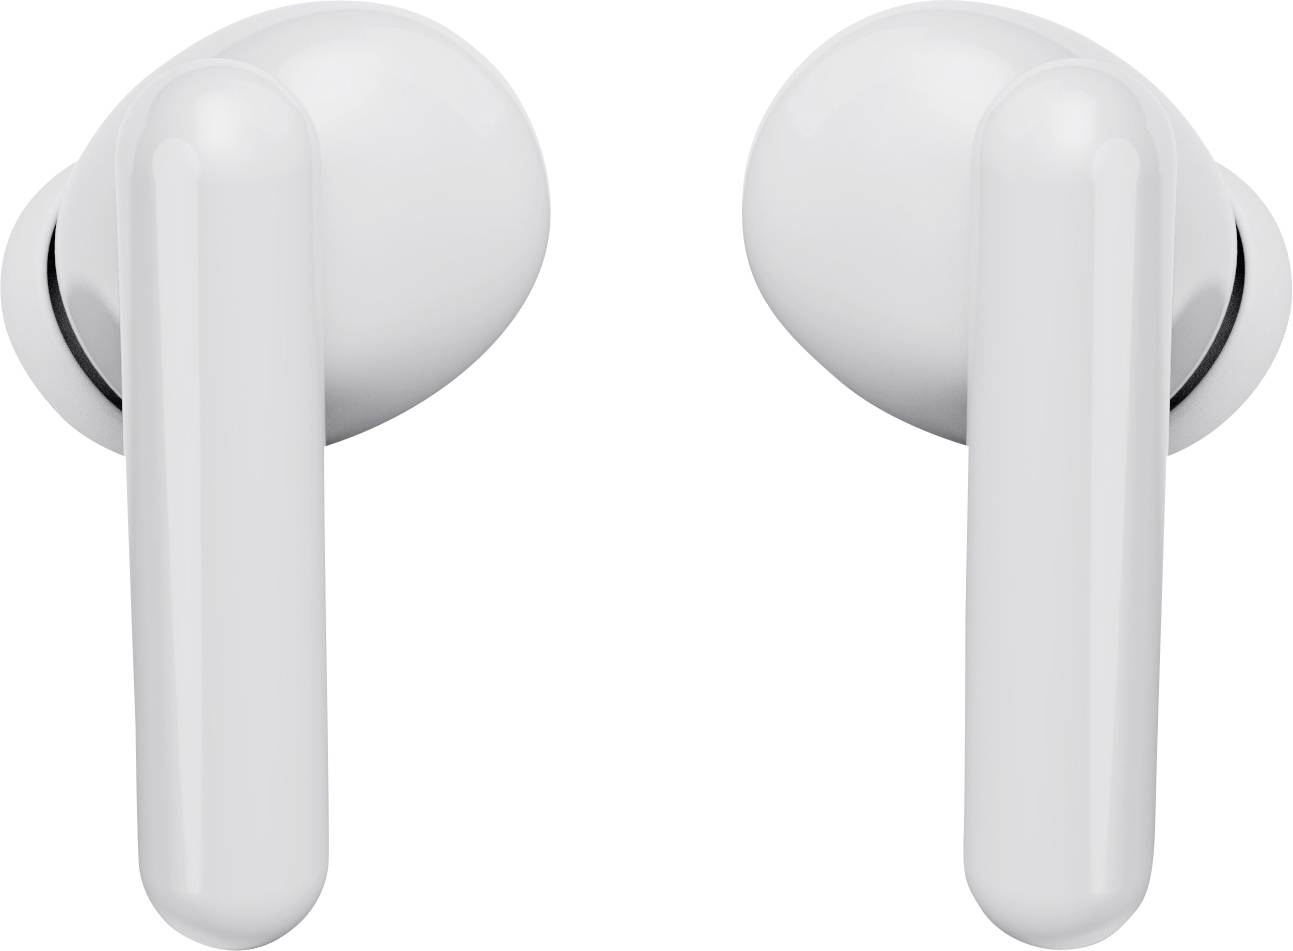 DENVER TWE-38 HiFi In Ear Kopfhörer Bluetooth® Weiß